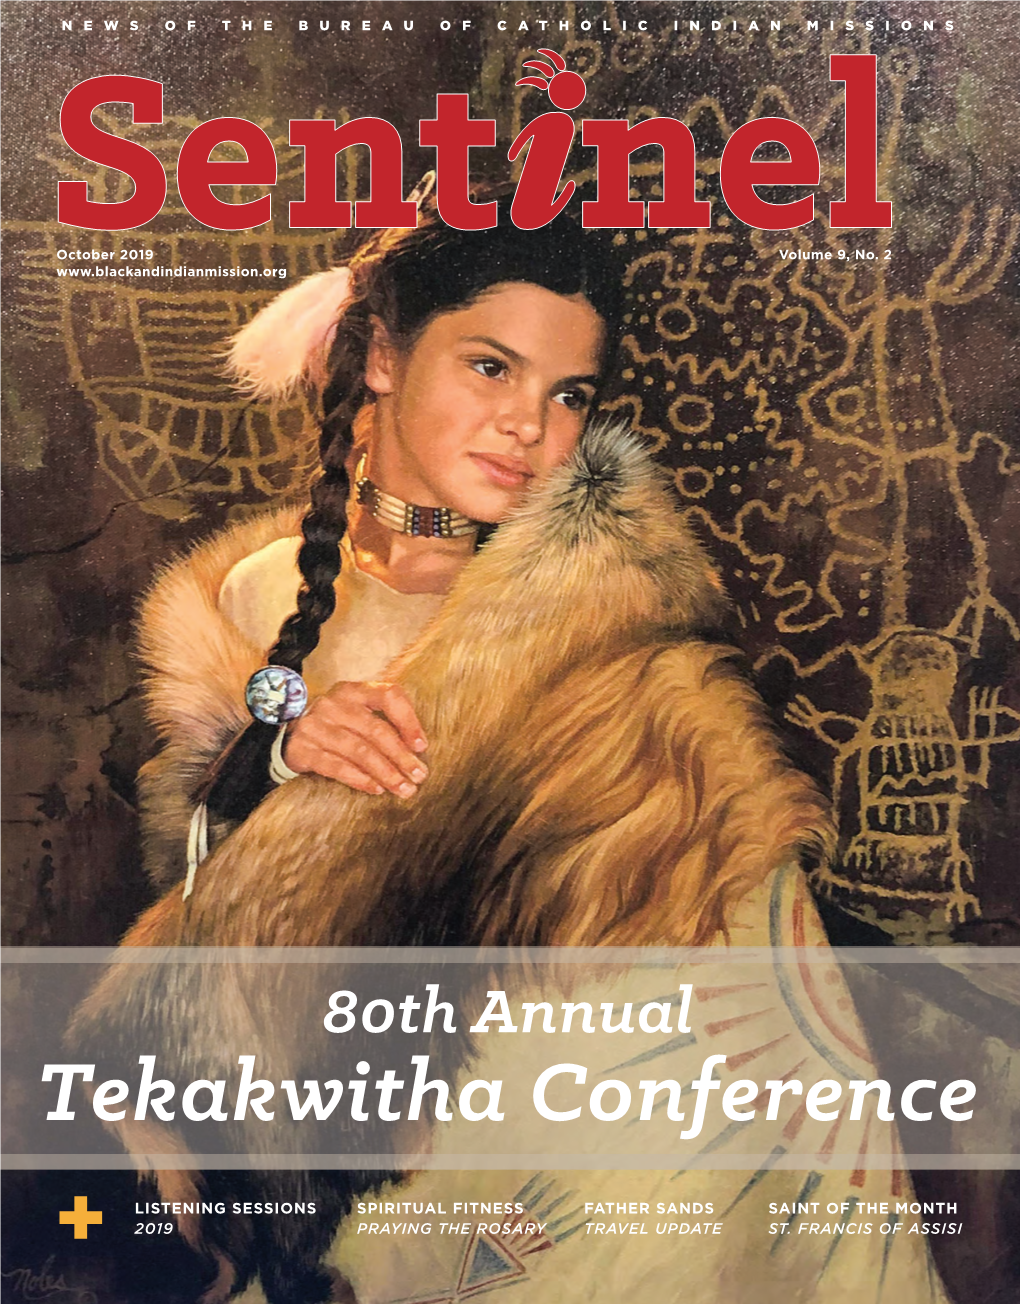 Tekakwitha Conference